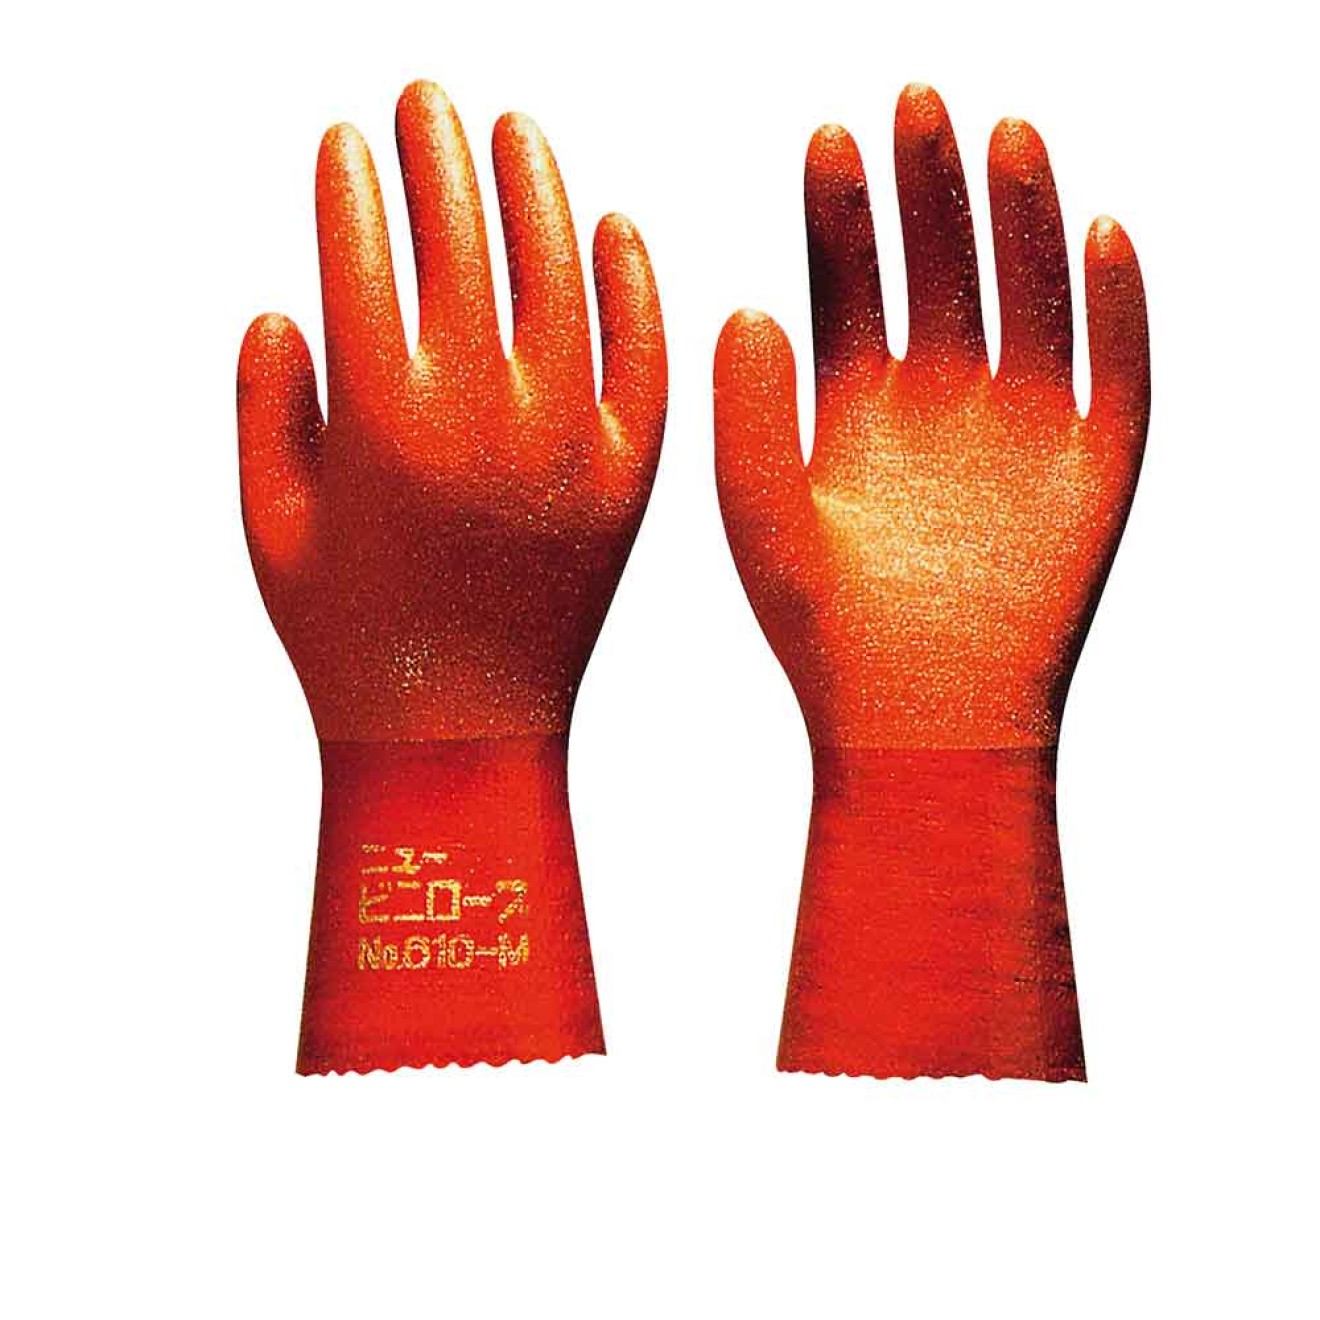 Cormoran Neopren Handschuhe Gr XL mit Klettverschluss L Handschuh Angler M 